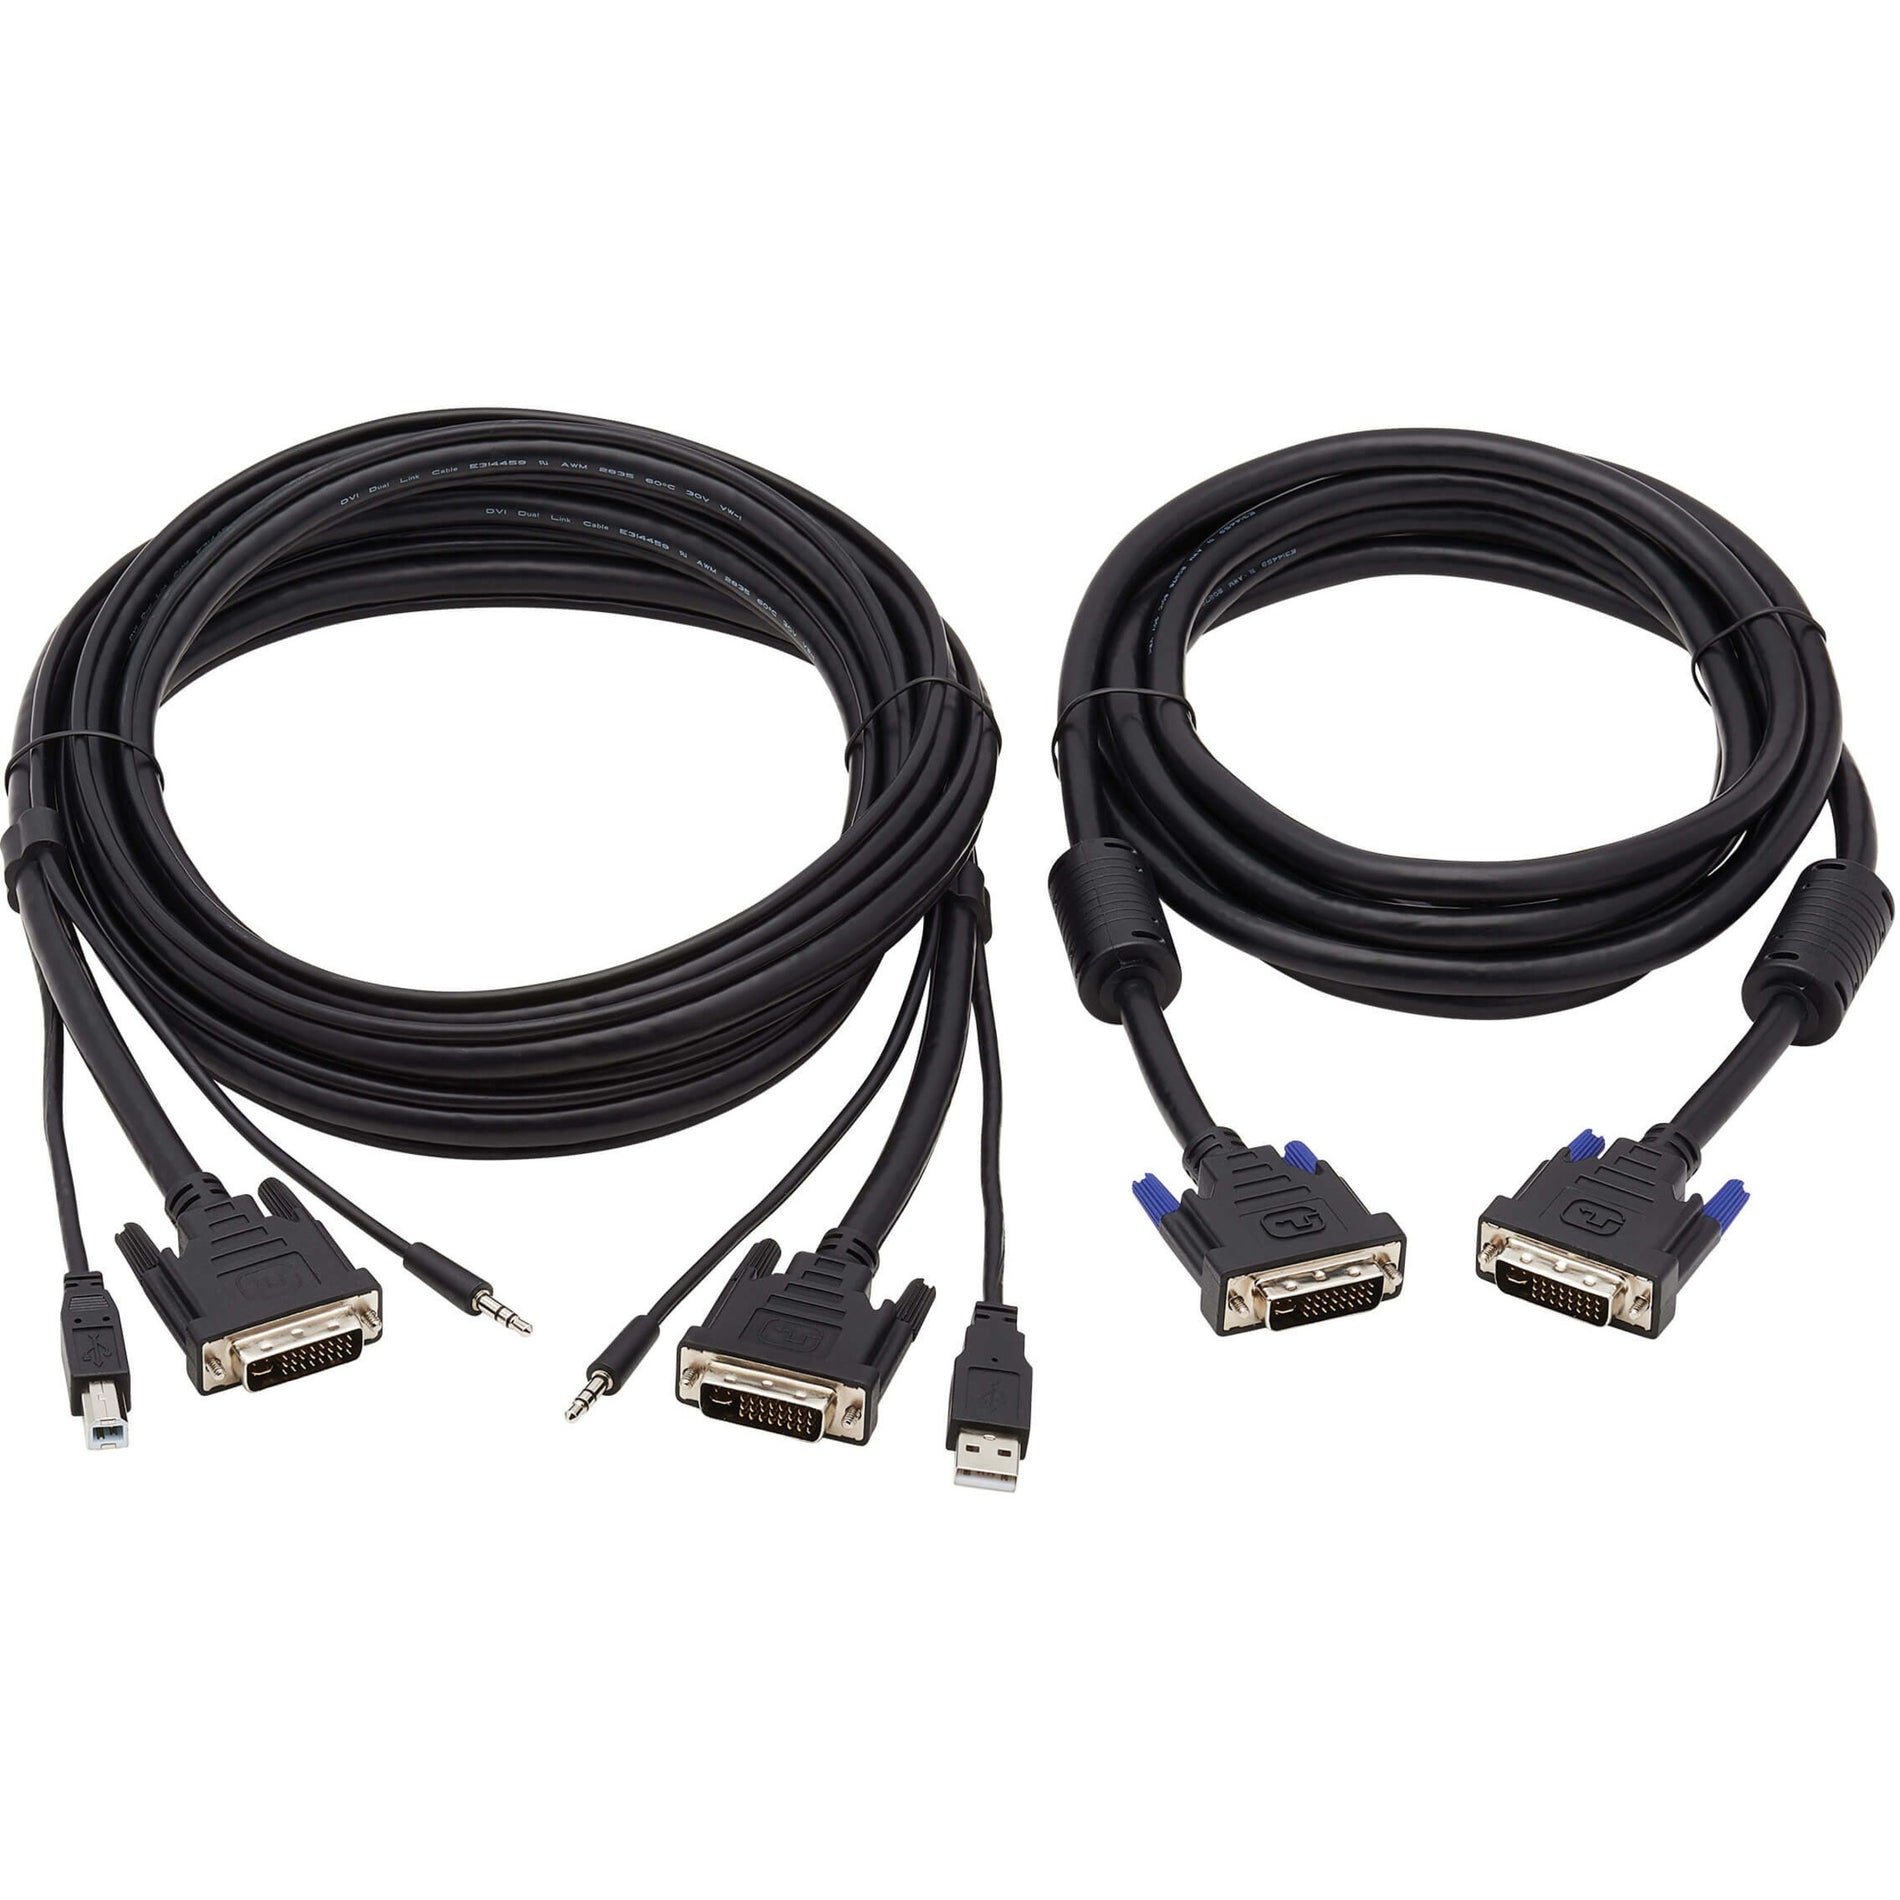 Tripp Lite P784-006-DV KVM电缆，6英尺，即插即用，480兆位/秒，2560 x 1600，DVI-I（双链路）数字视频，USB 2.0类型A/B，立体声音频，终身保修 Tripp Lite 普利特